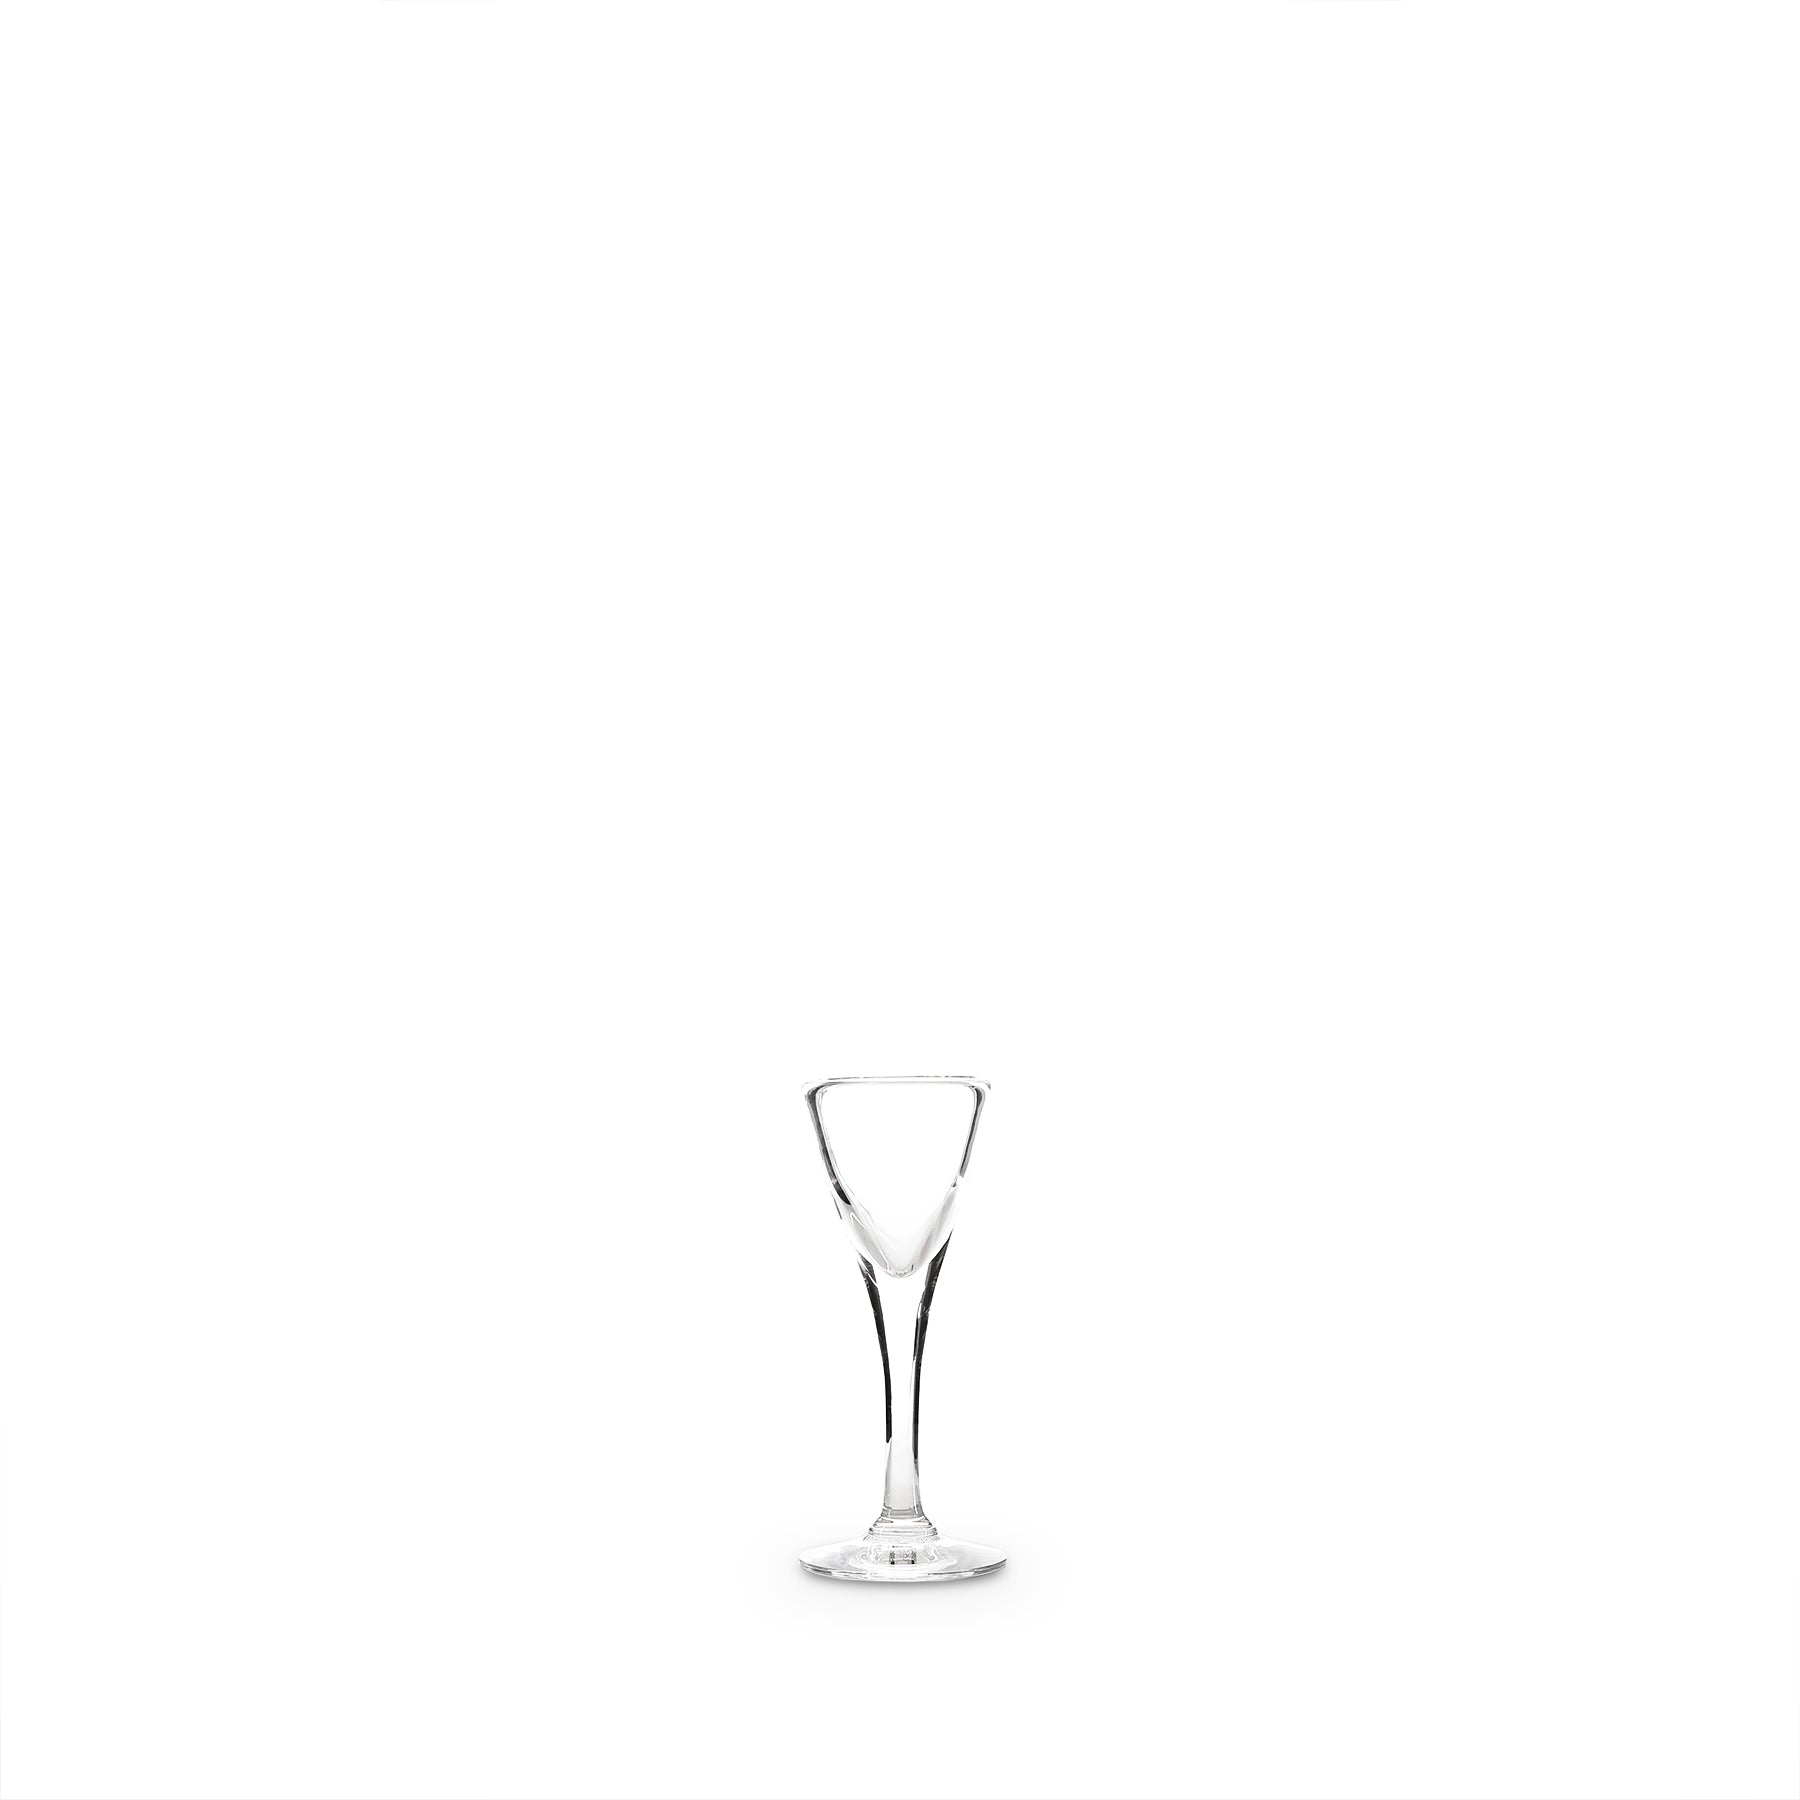 Bellman Vodka Glass Zoom Image 1